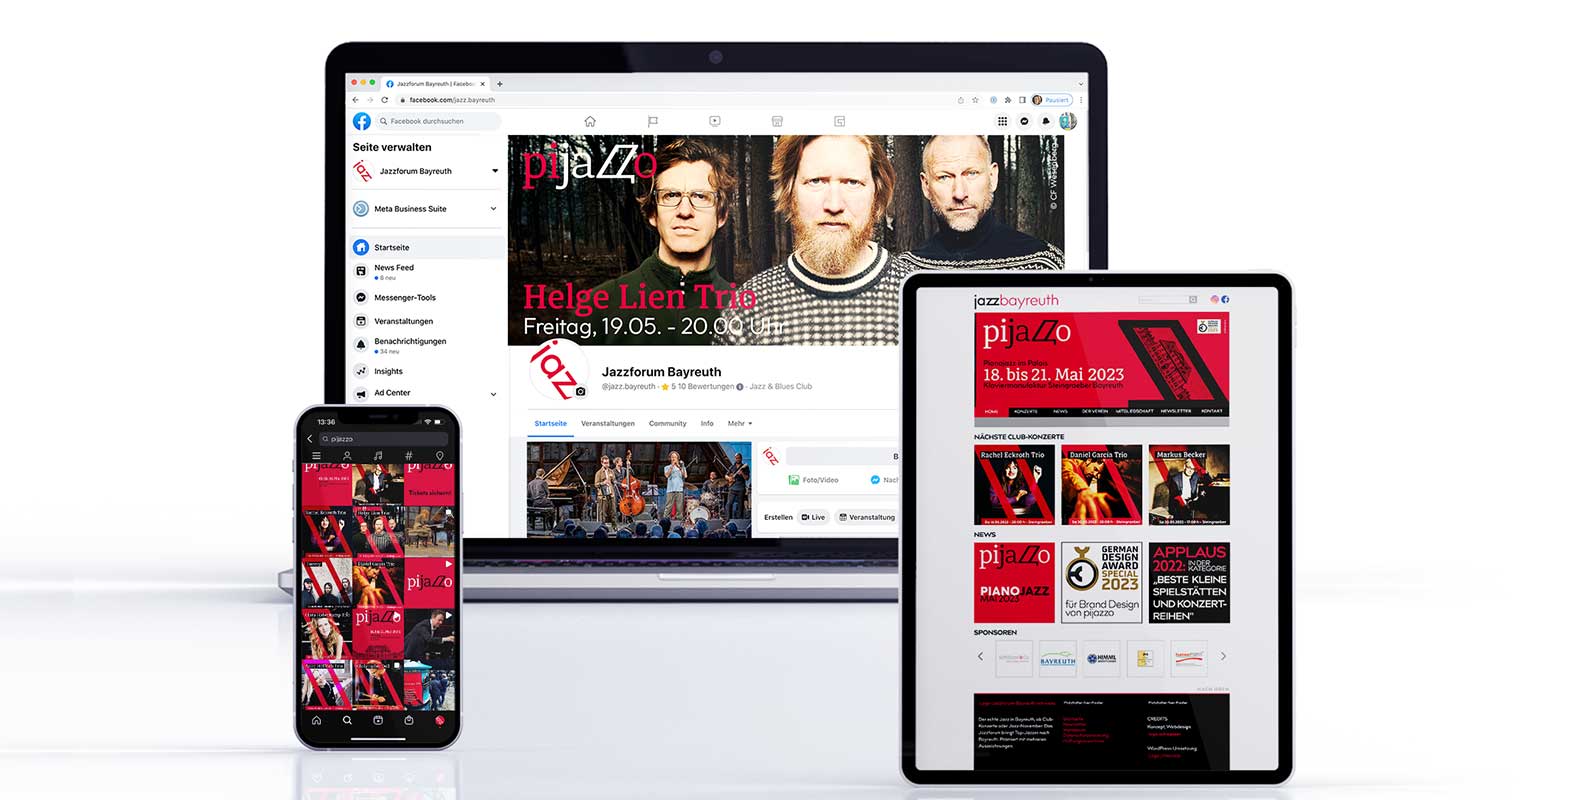 webdesign-pijazzo-jazzforum-bayreuth-werbeagentur-social-media